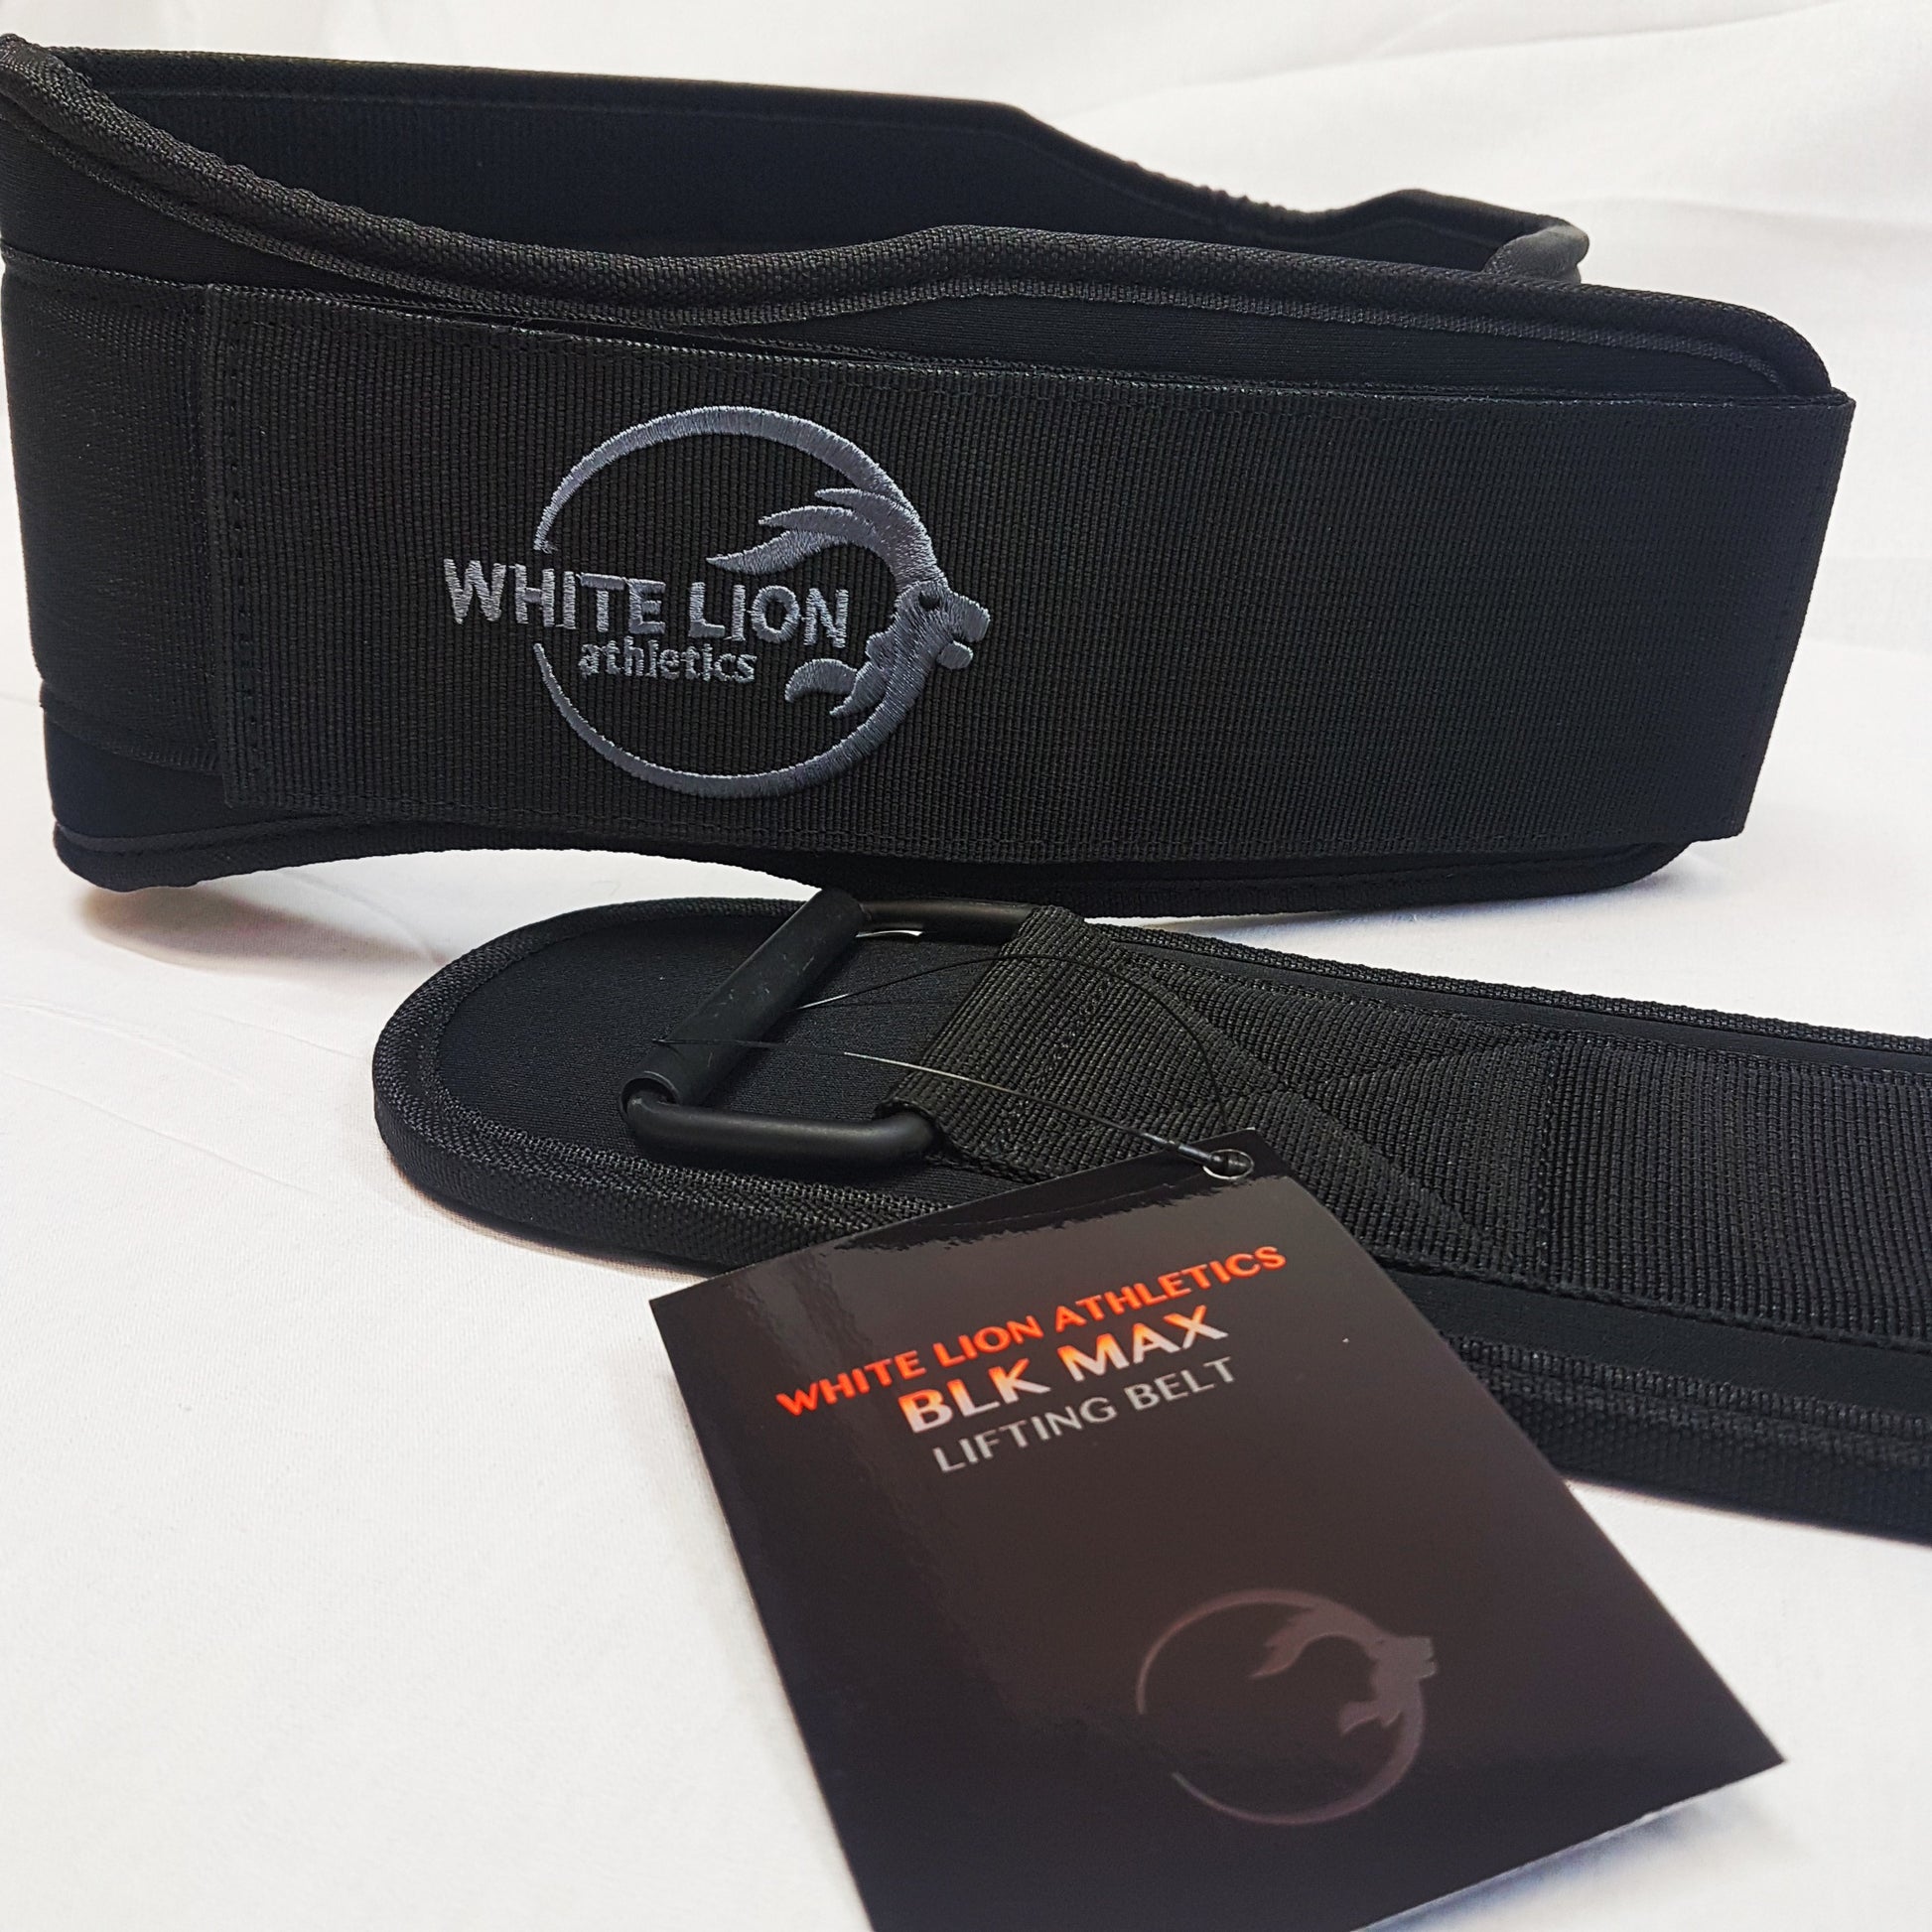 Weightlifting Belt | BLK MAX  5" Nylon Lifting Belt - White Lion Athletics